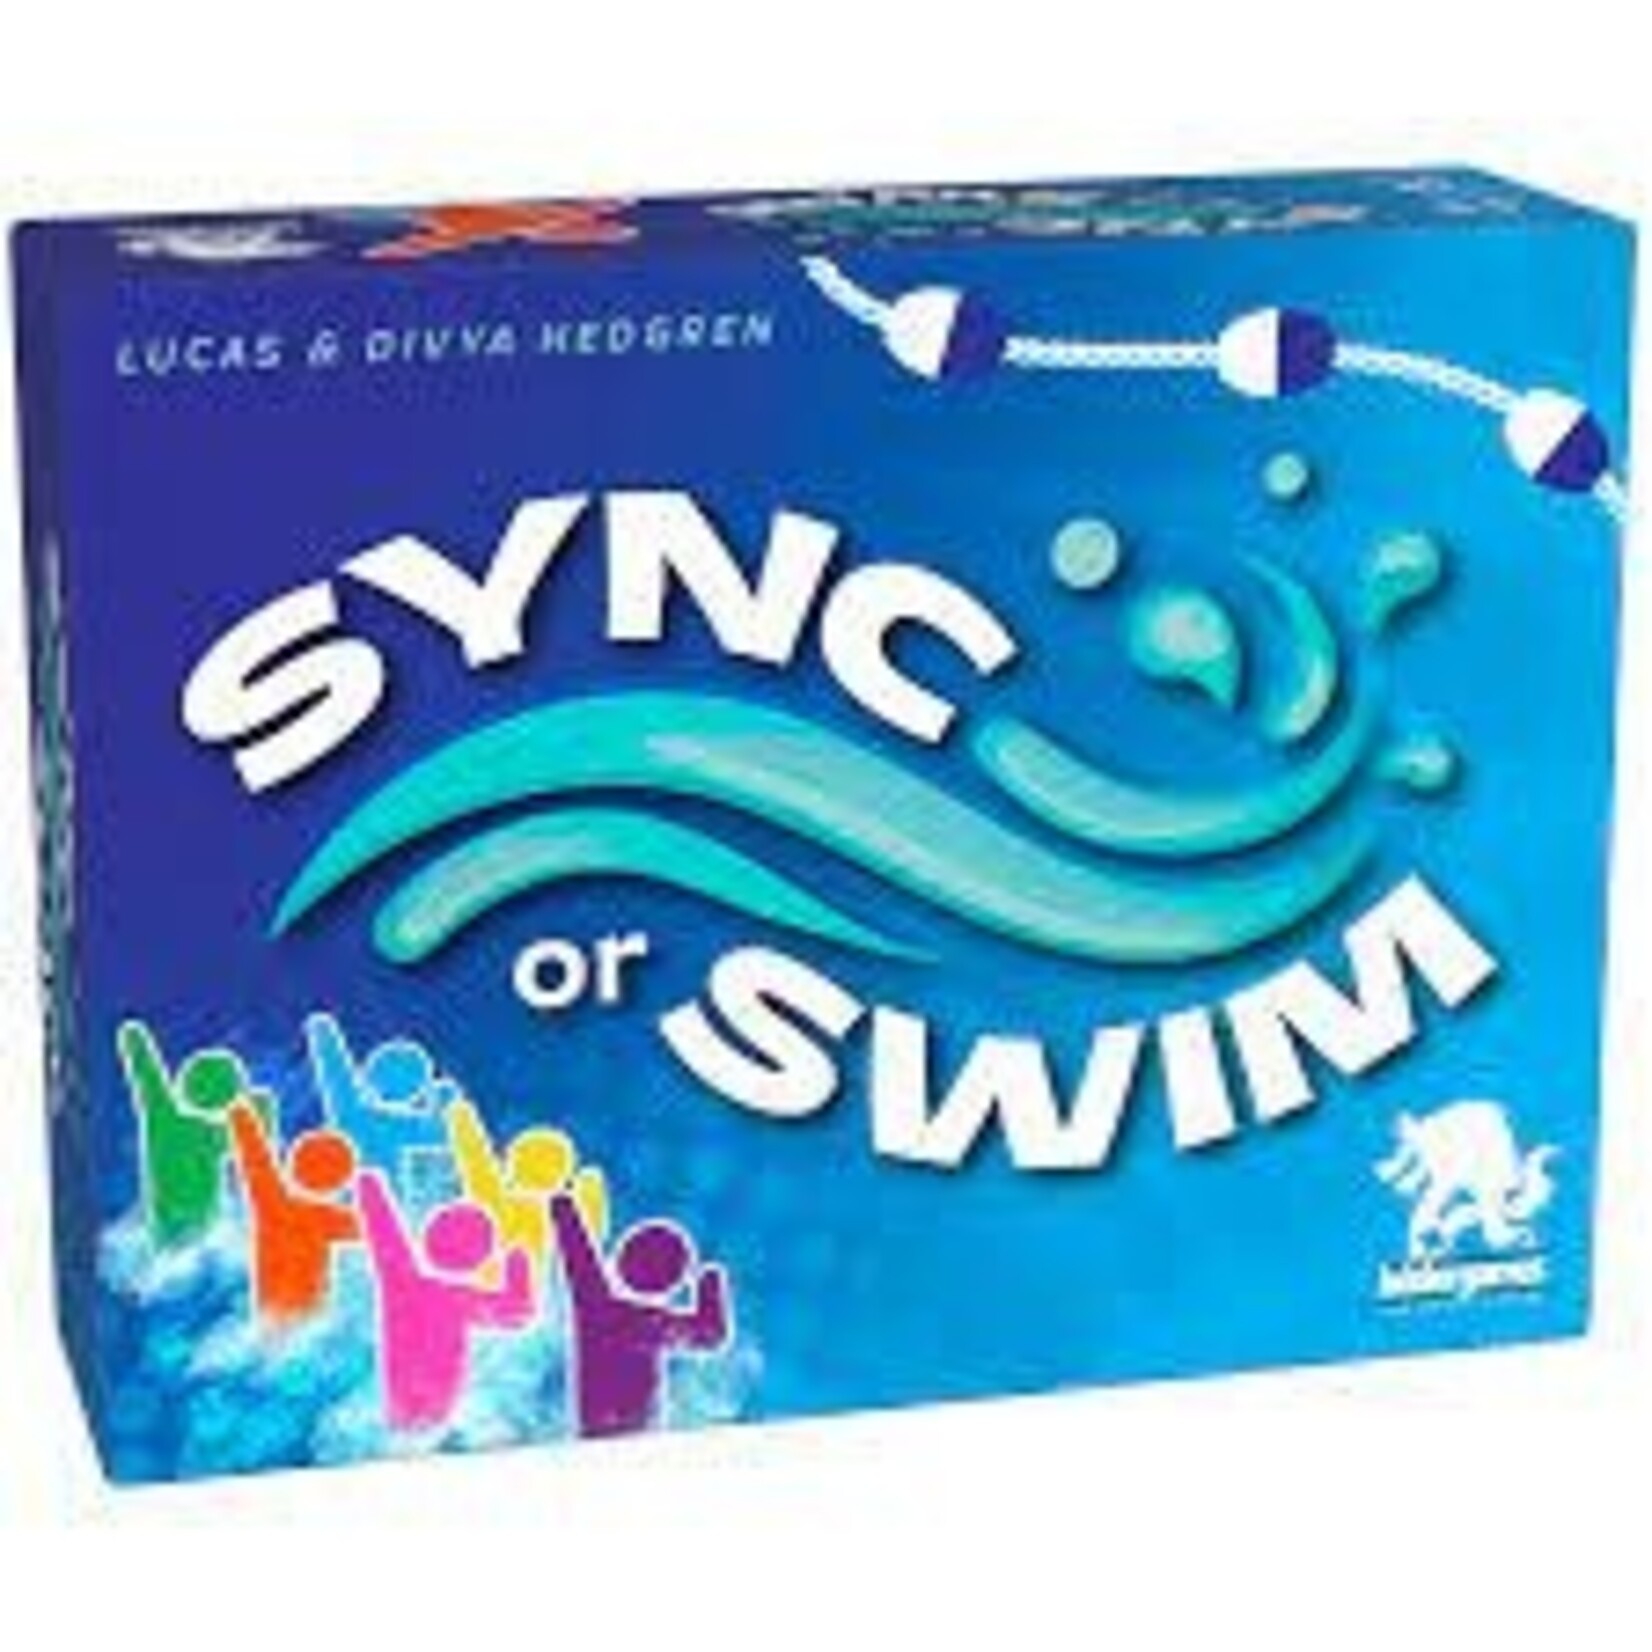 Bezier games Sync or Swim